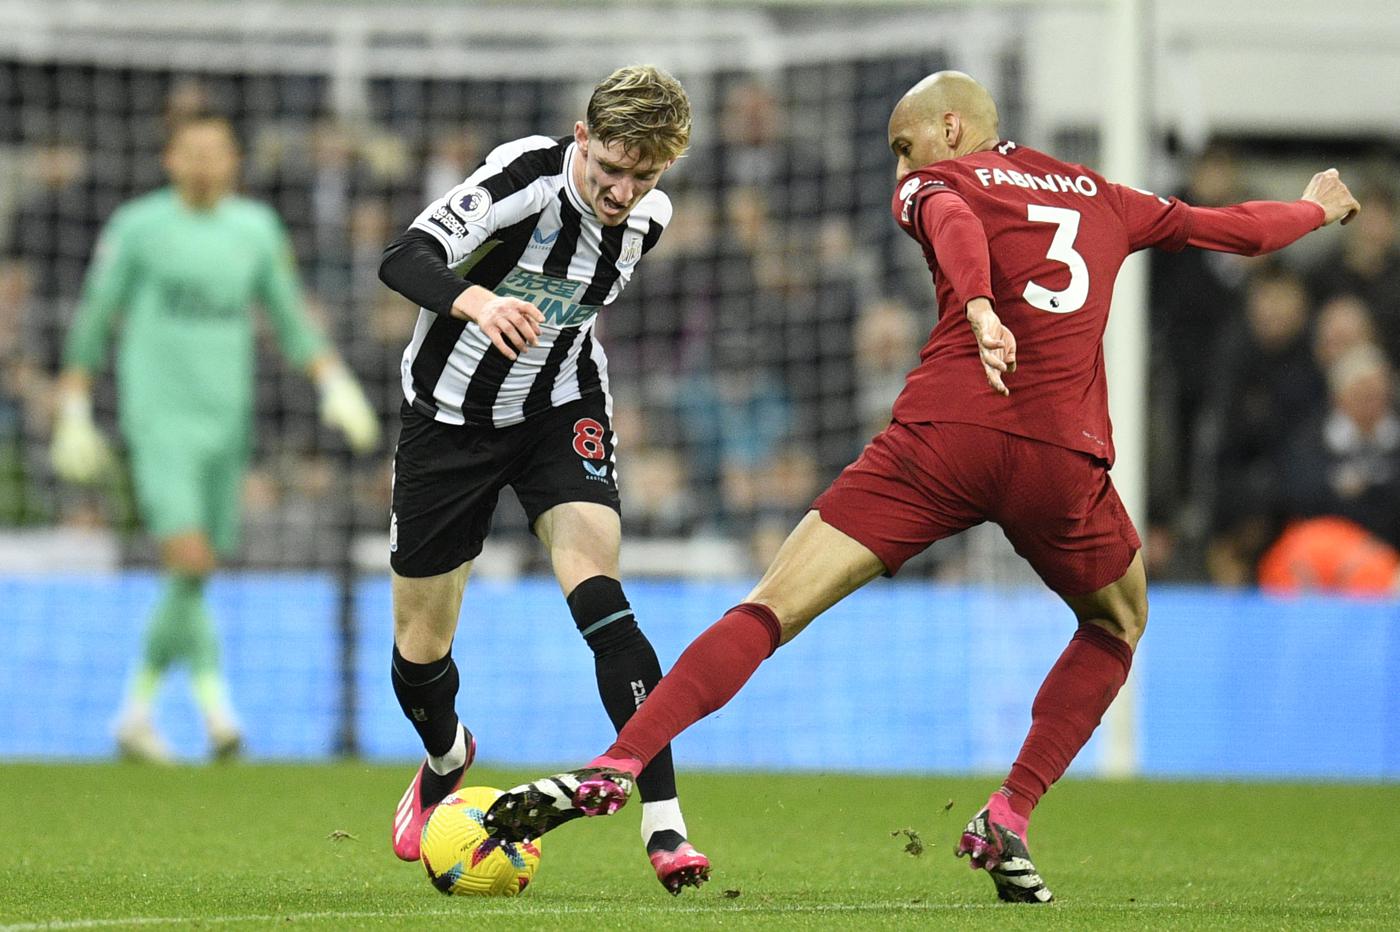 Newcastle - Liverpool - 0:2. English Championship, round 24